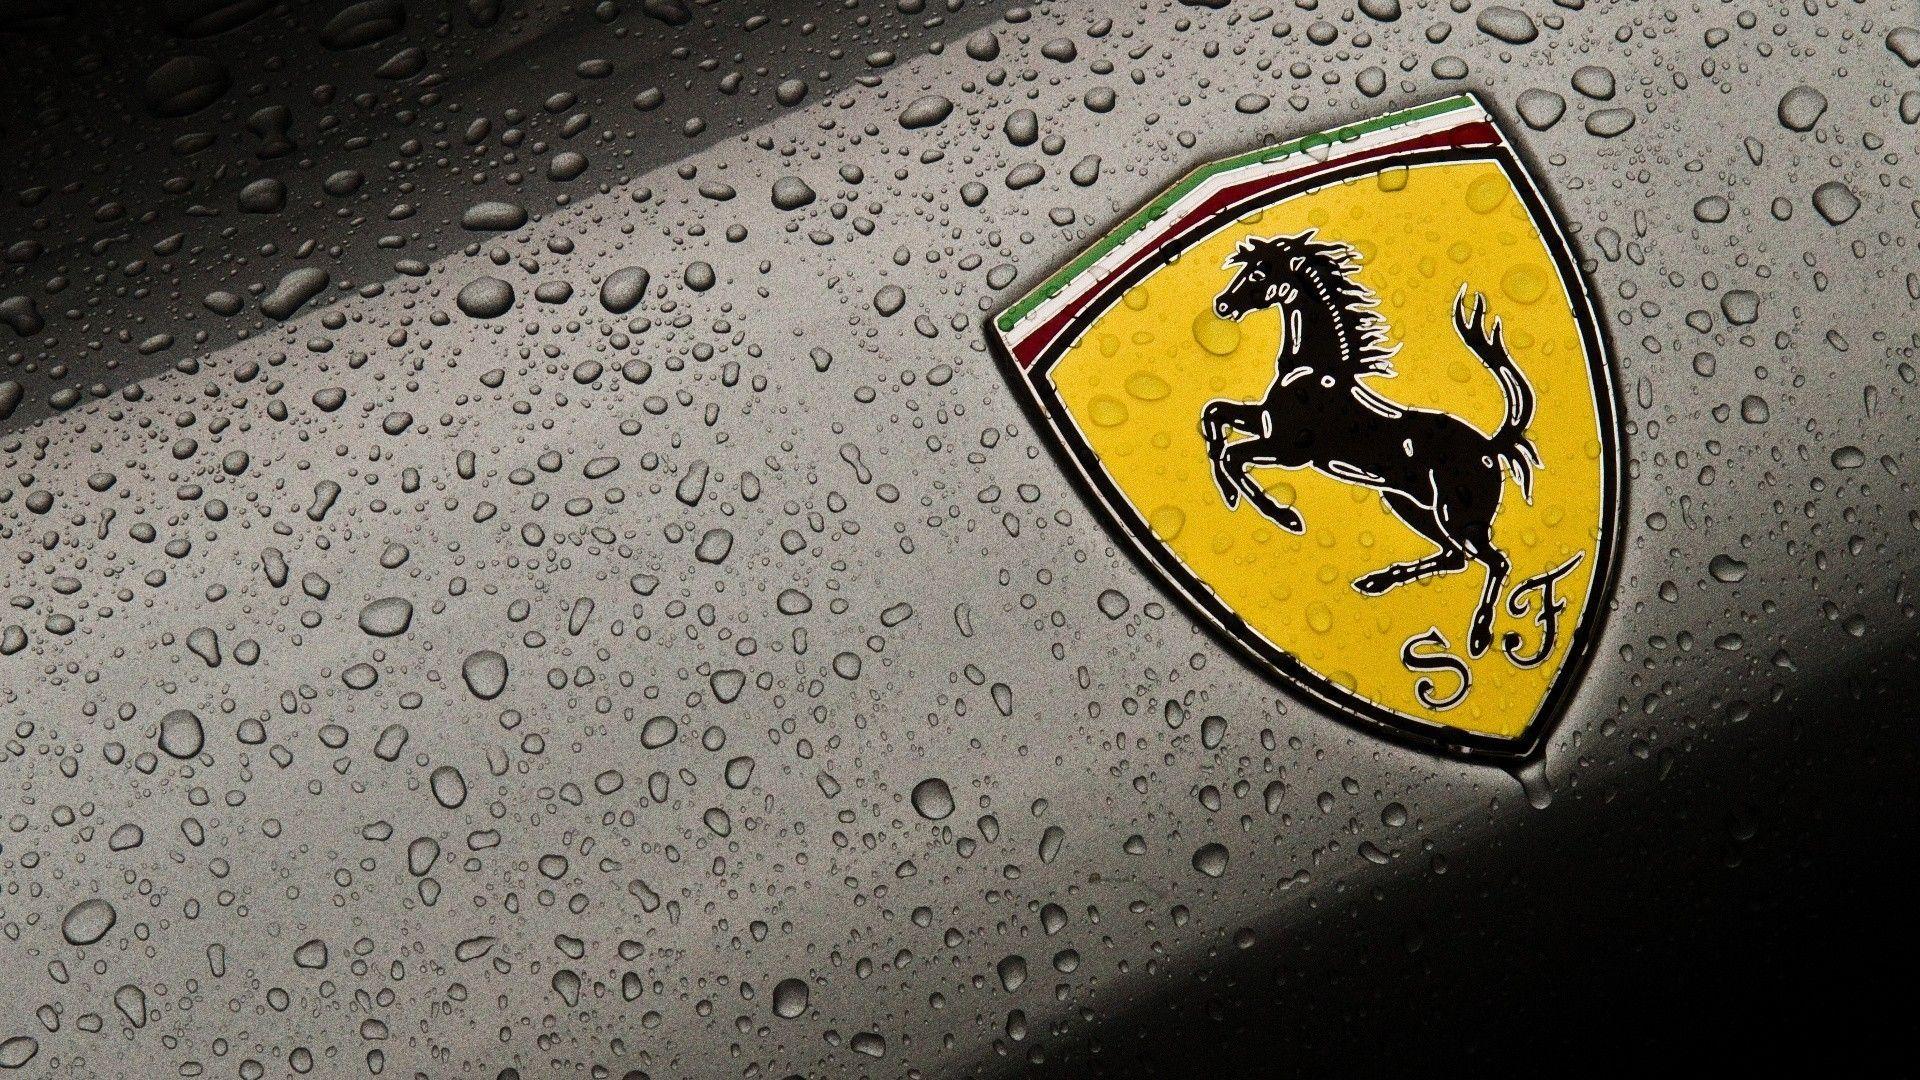 Ferrari emblem cars logos water drops wallpaper